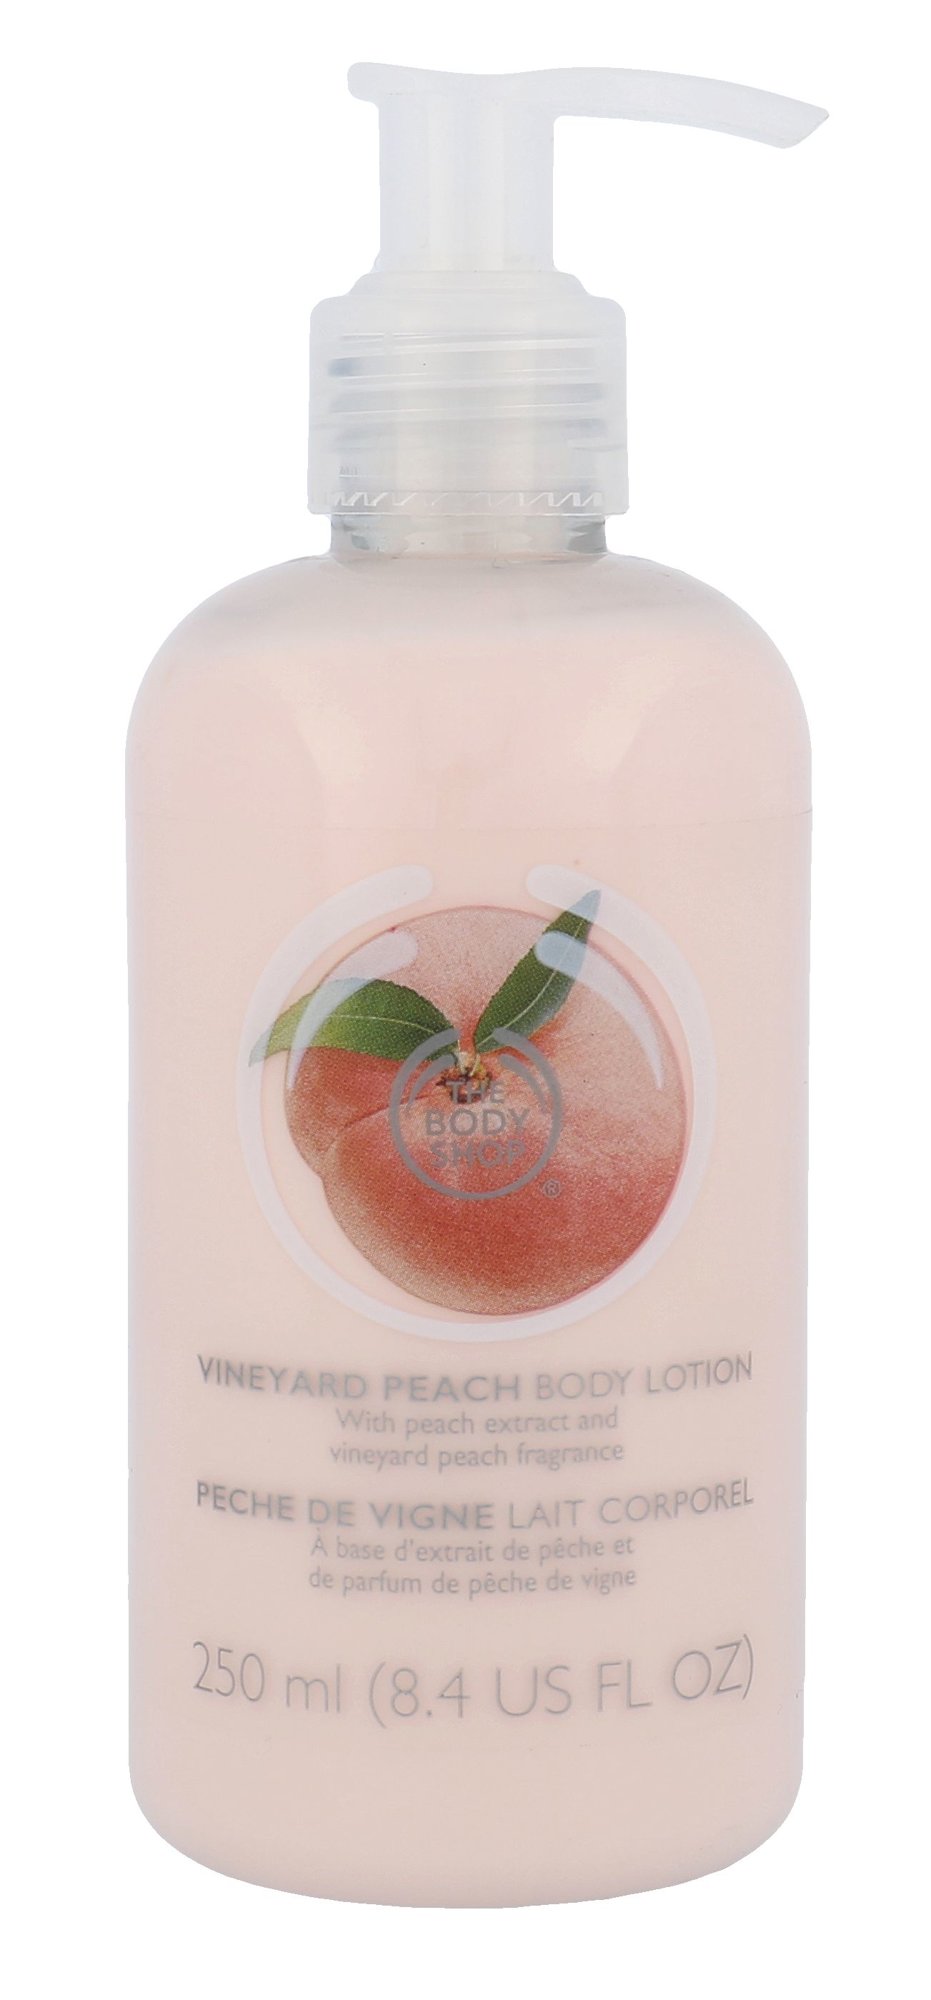 The Body Shop Vineyard Peach Body Lotion